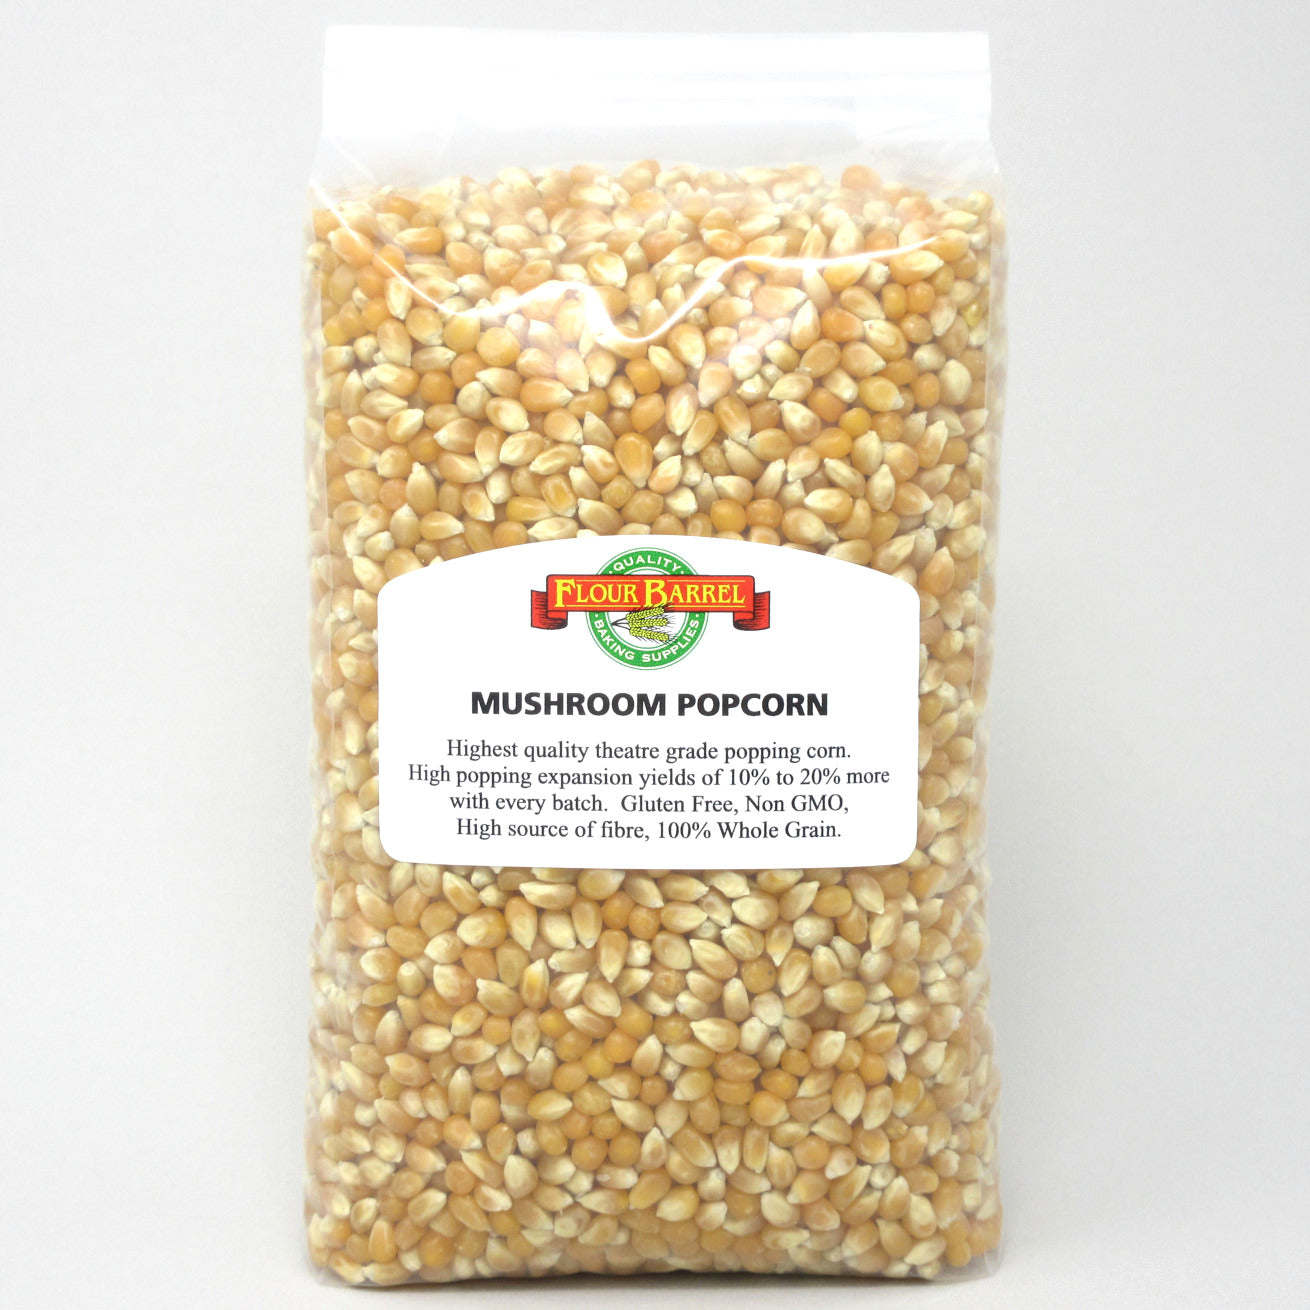 Flour Barrel product image - Mushroom Popcorn